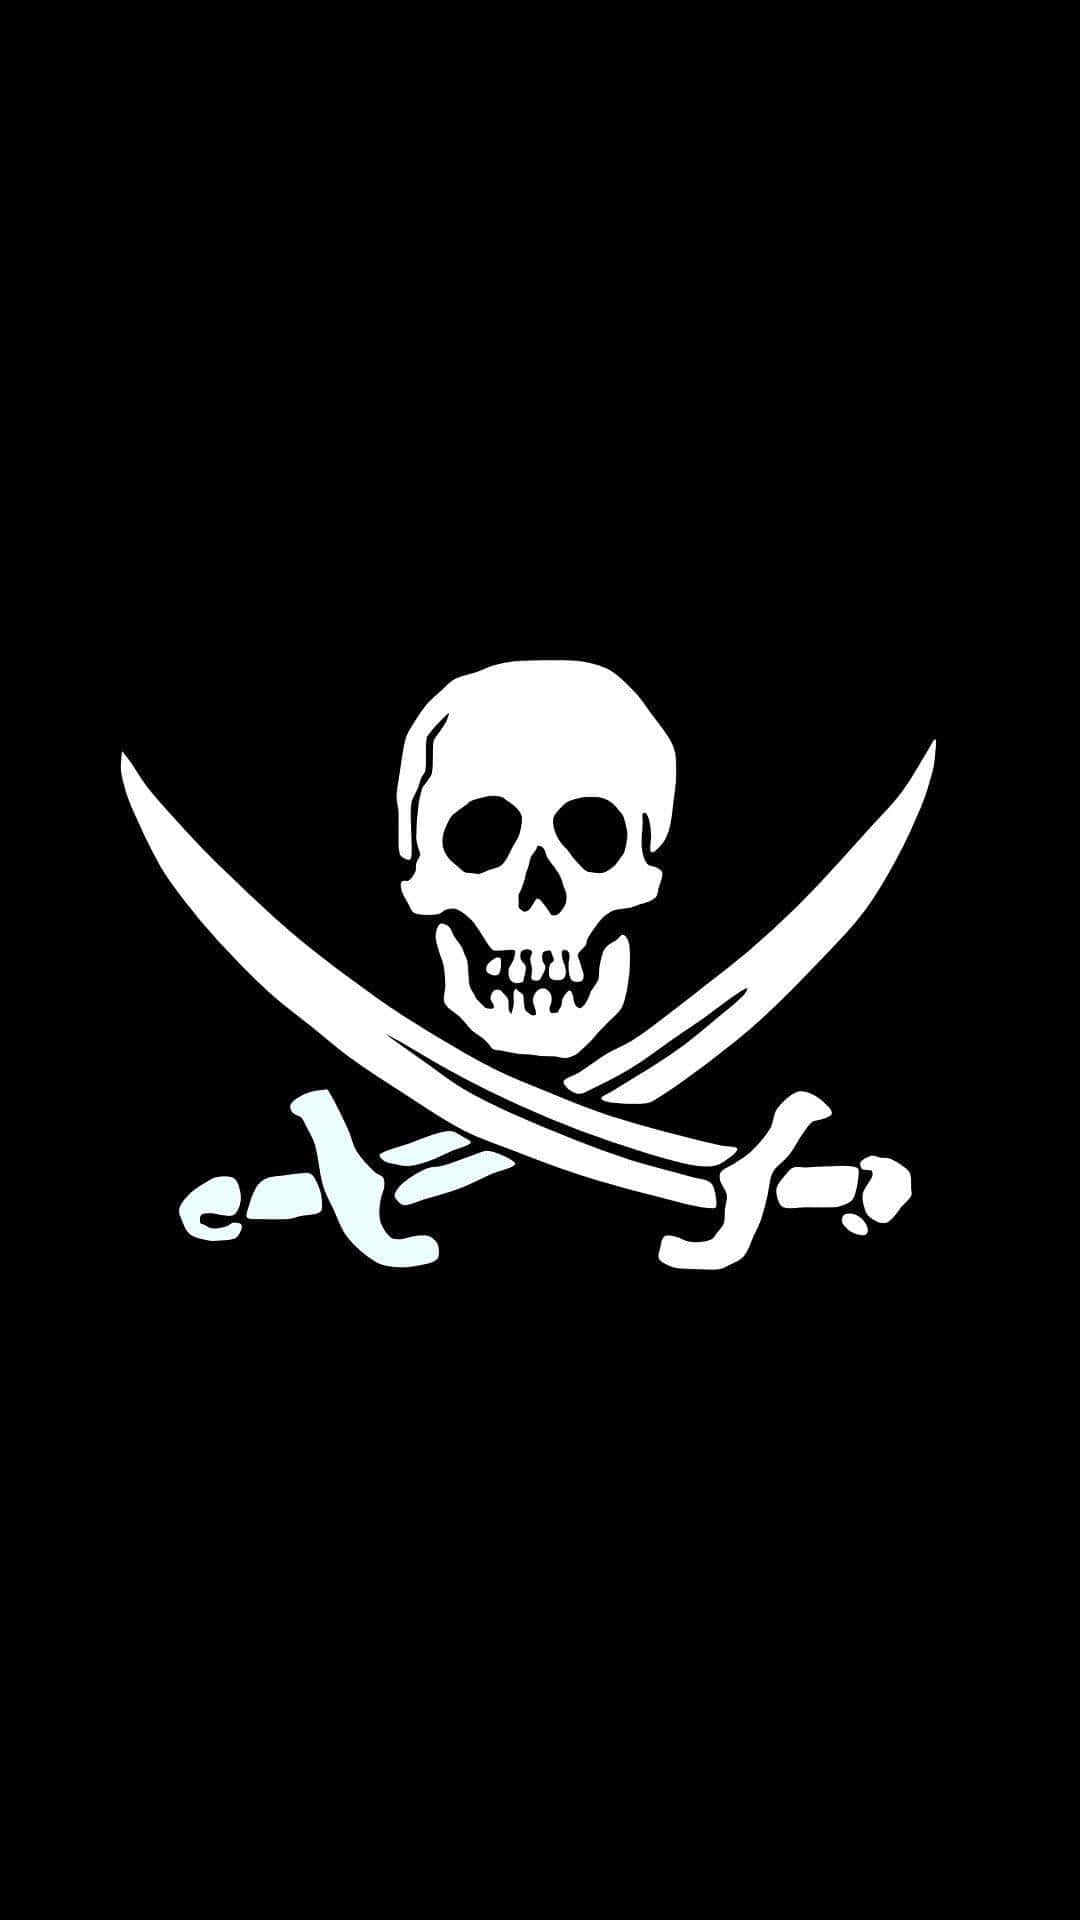 Pirate Skull And Crossbones On Black Background Background